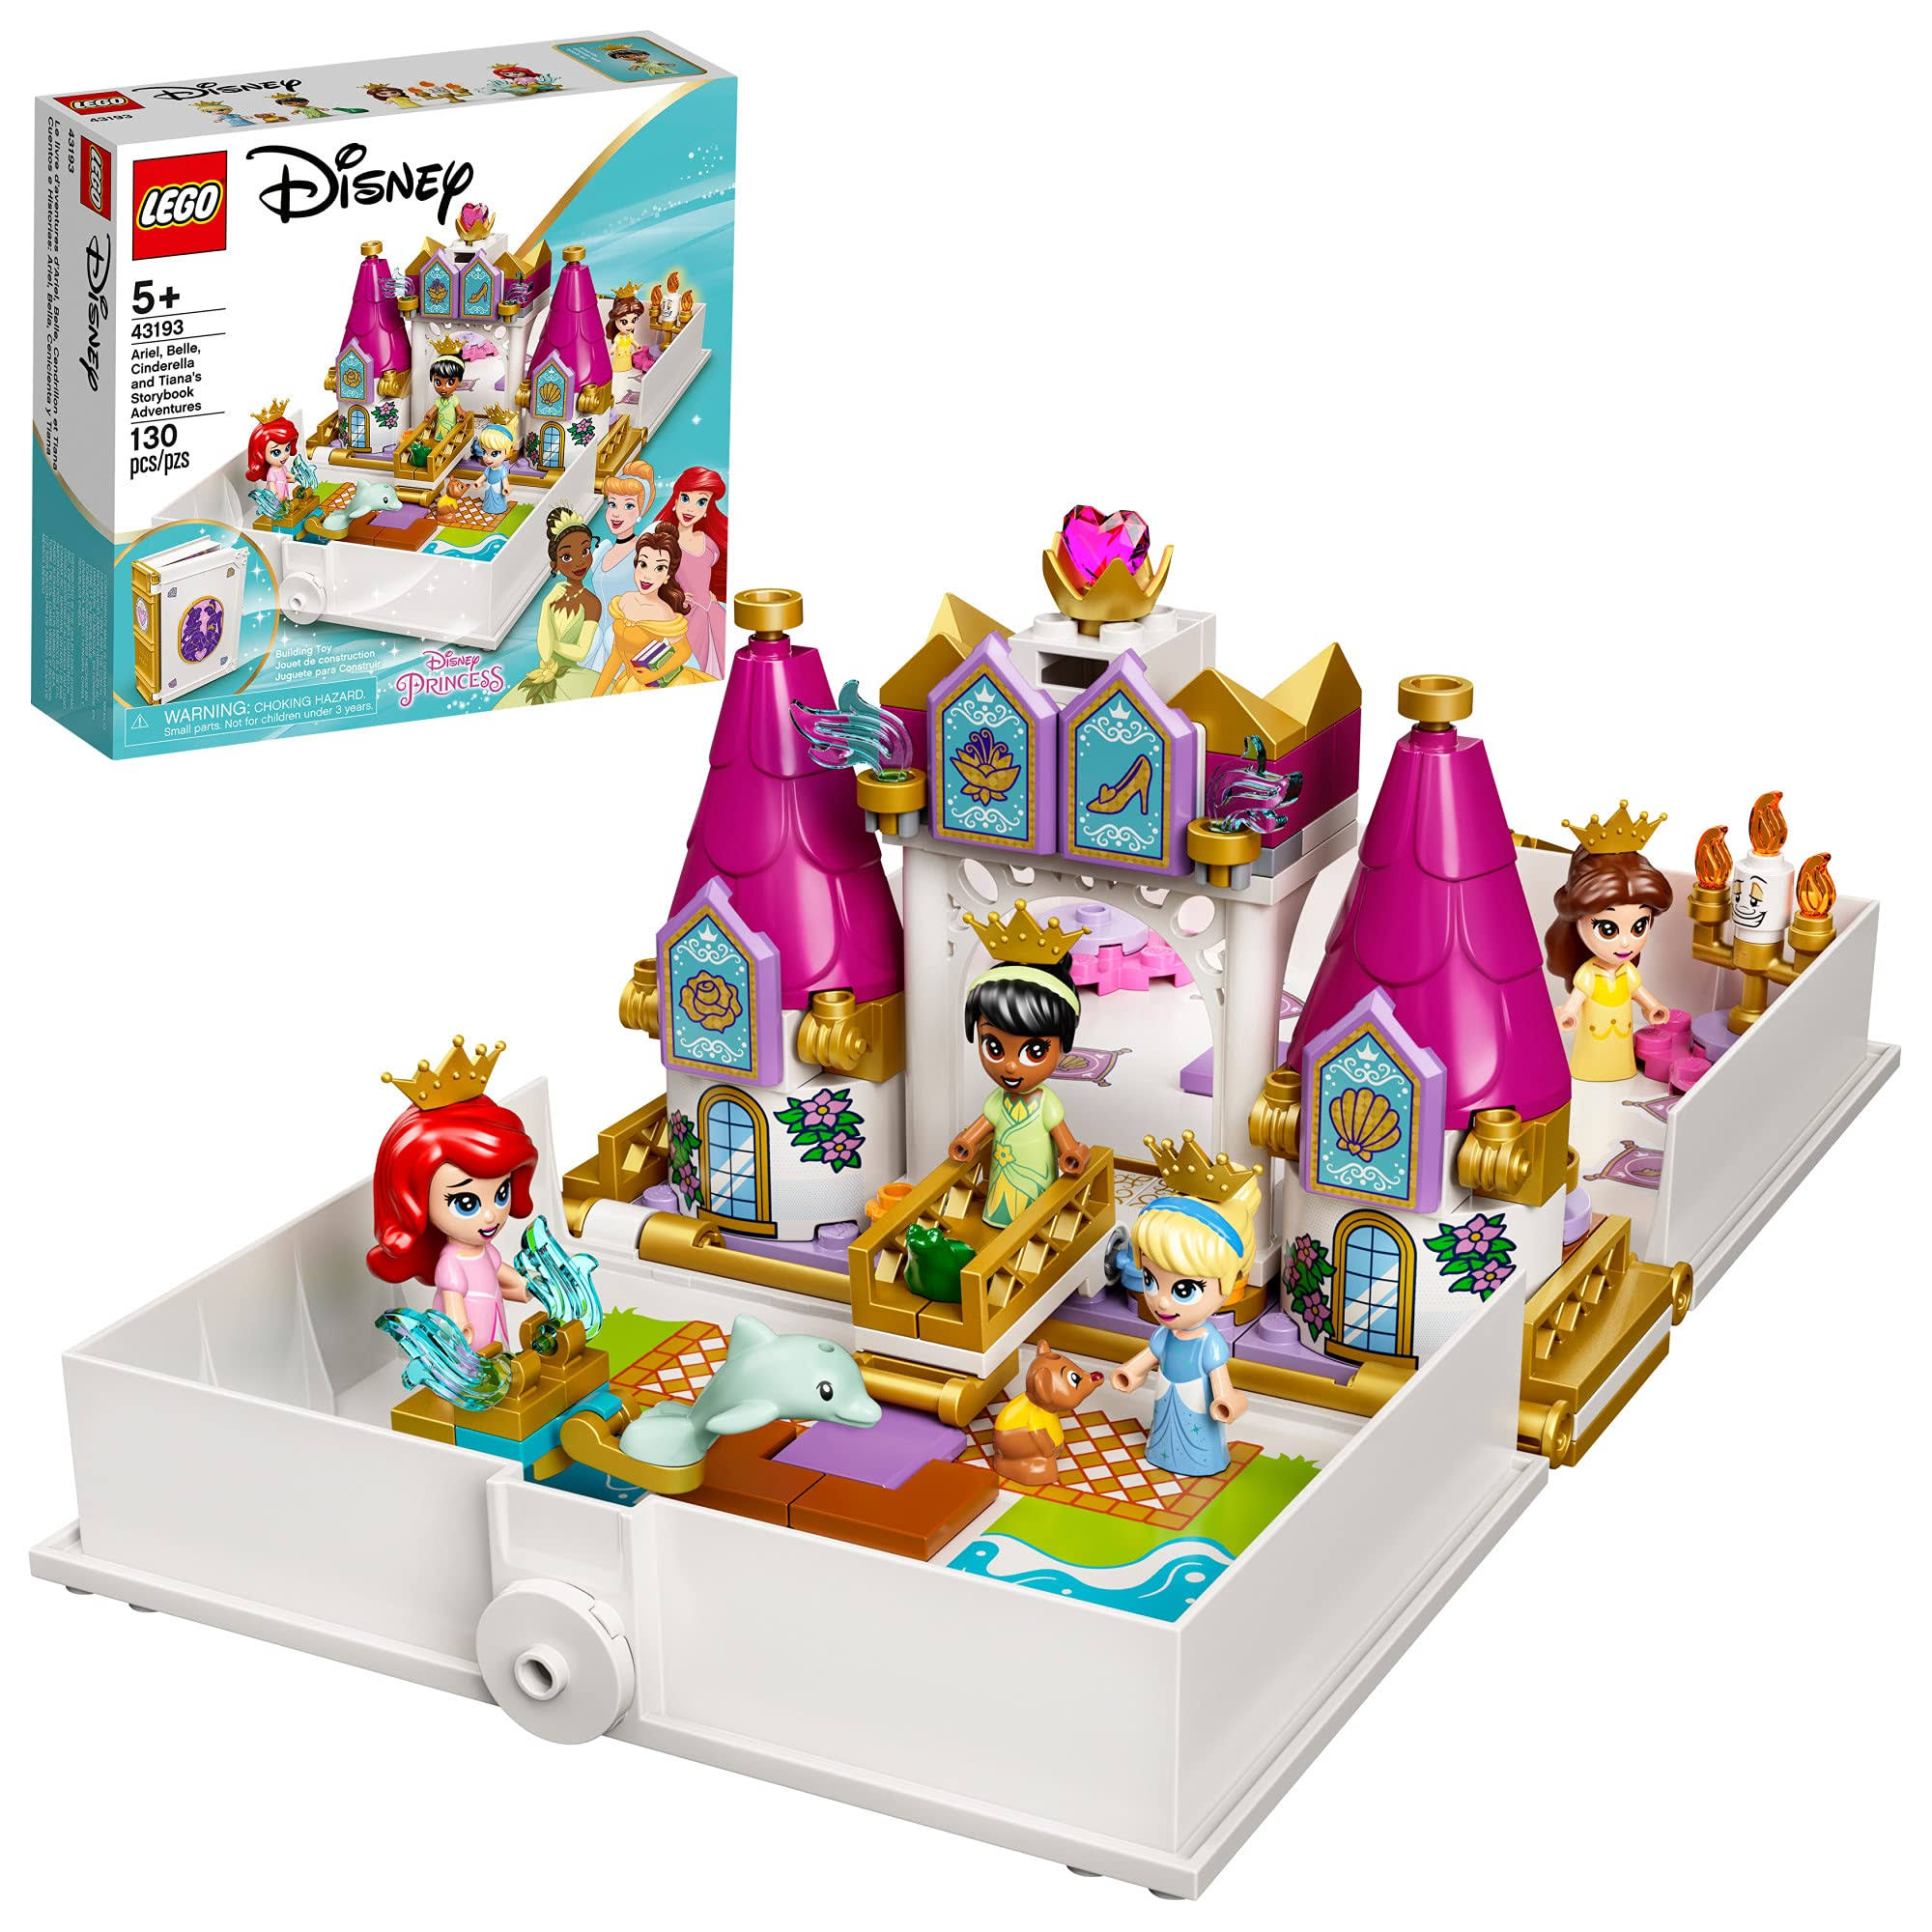 Crayola Travel Pack, Disney Princess